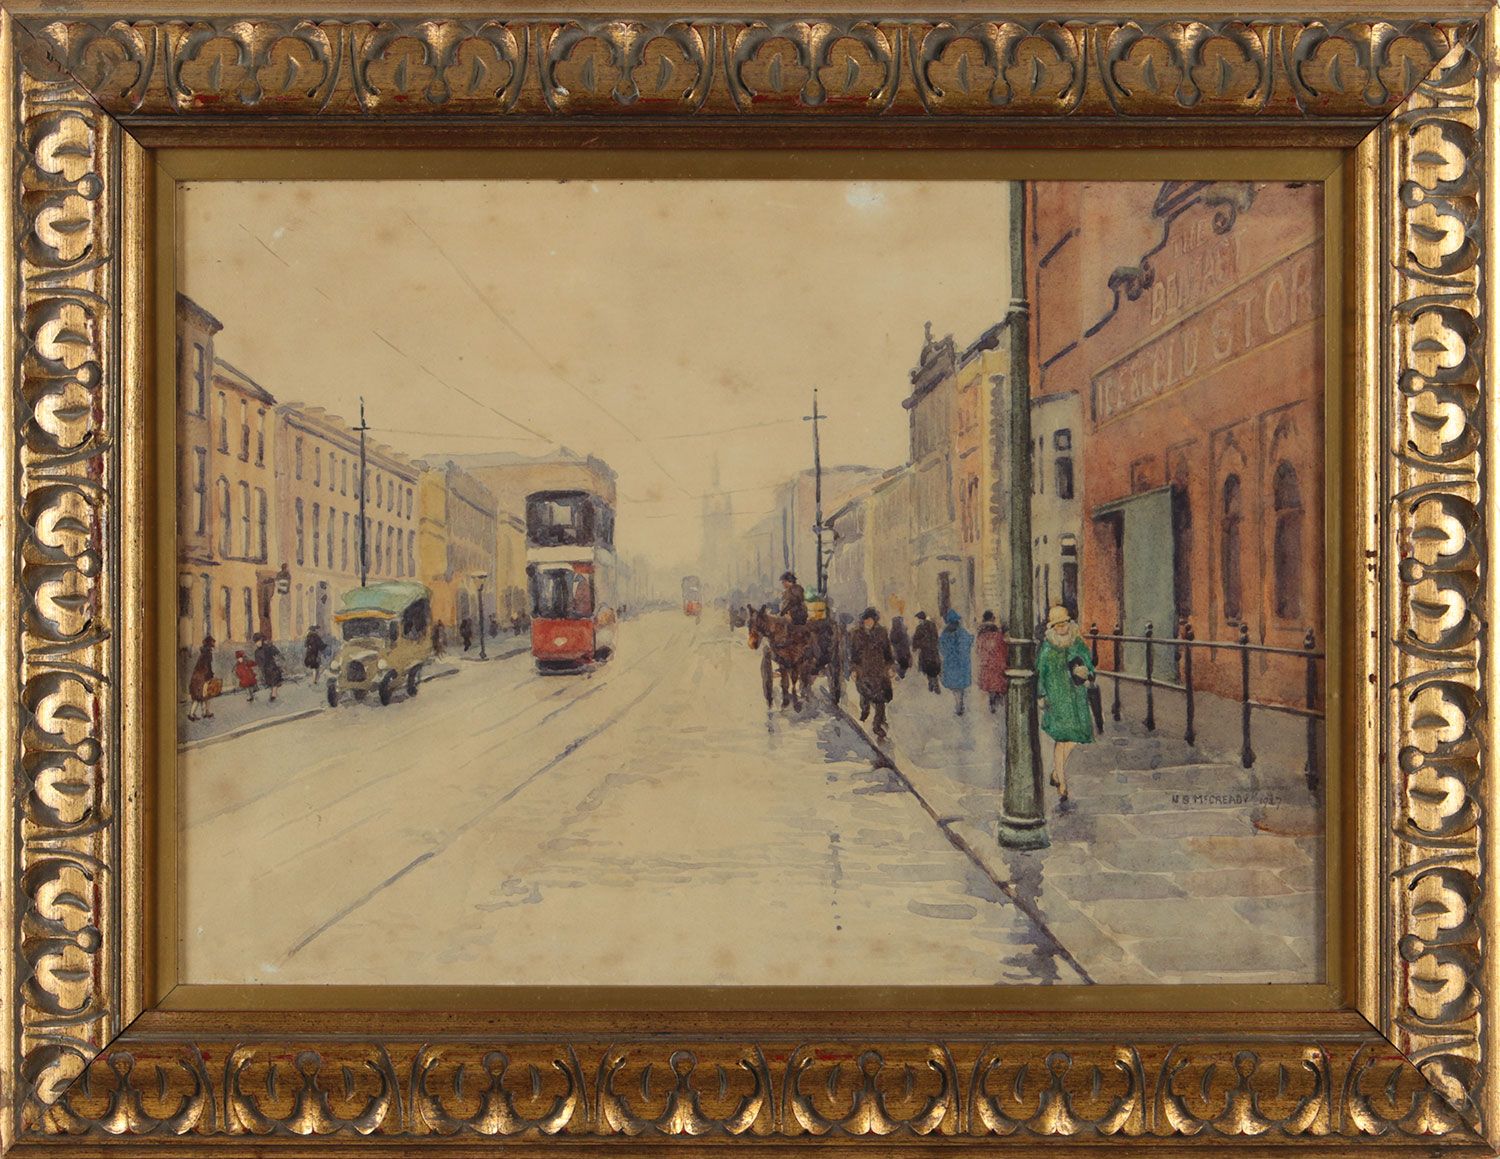 GREAT VICTORIA STREET, BELFAST, 1927 by Ellen Brown Workman McCready at Ross's Online Art Auctions